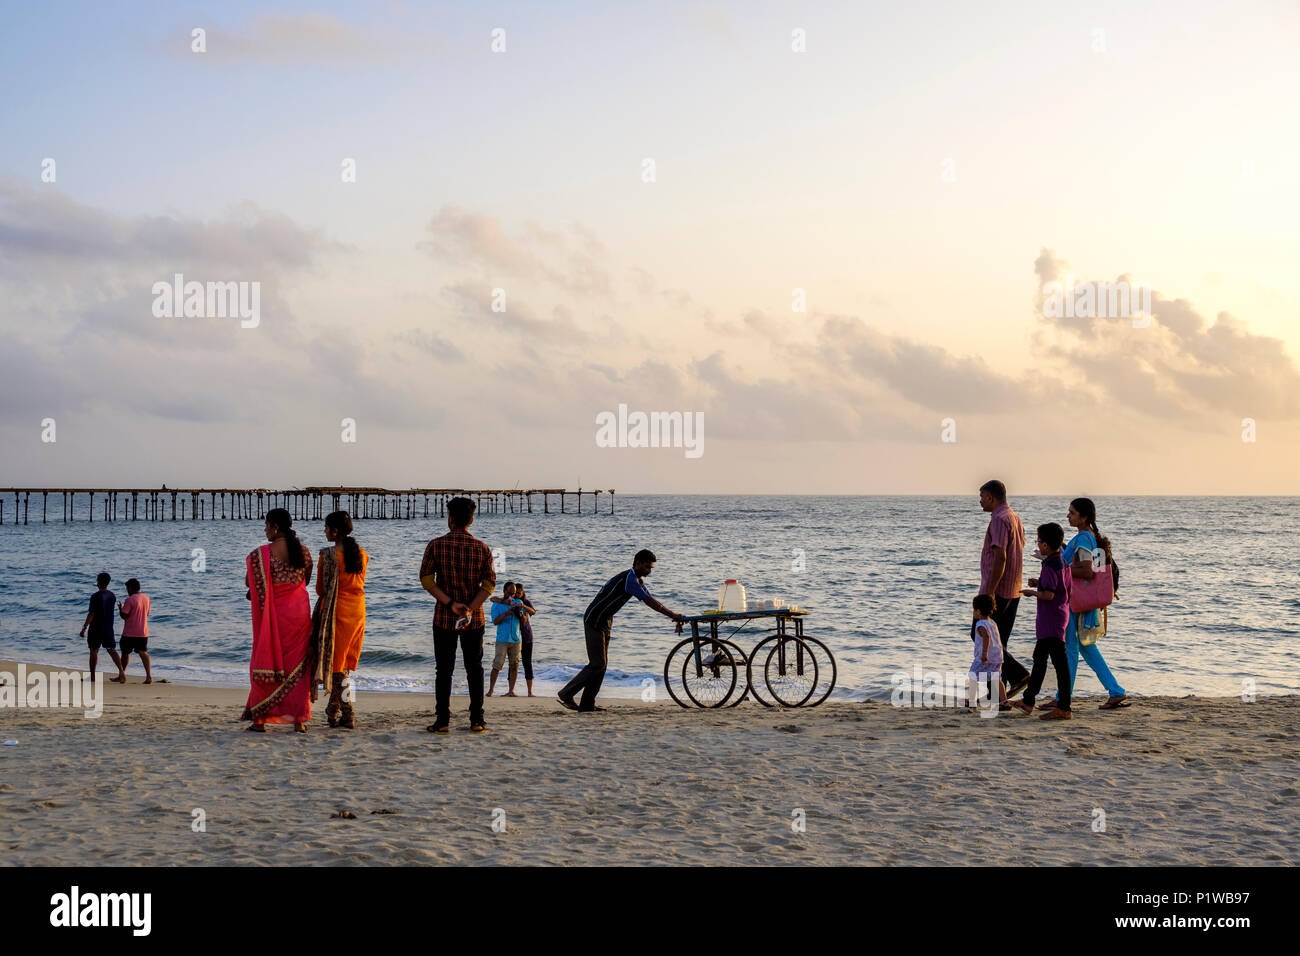 People enjoying an early evening walk on Alleppey (or Alappuzha) Beach, Kerala, India. Stock Photo